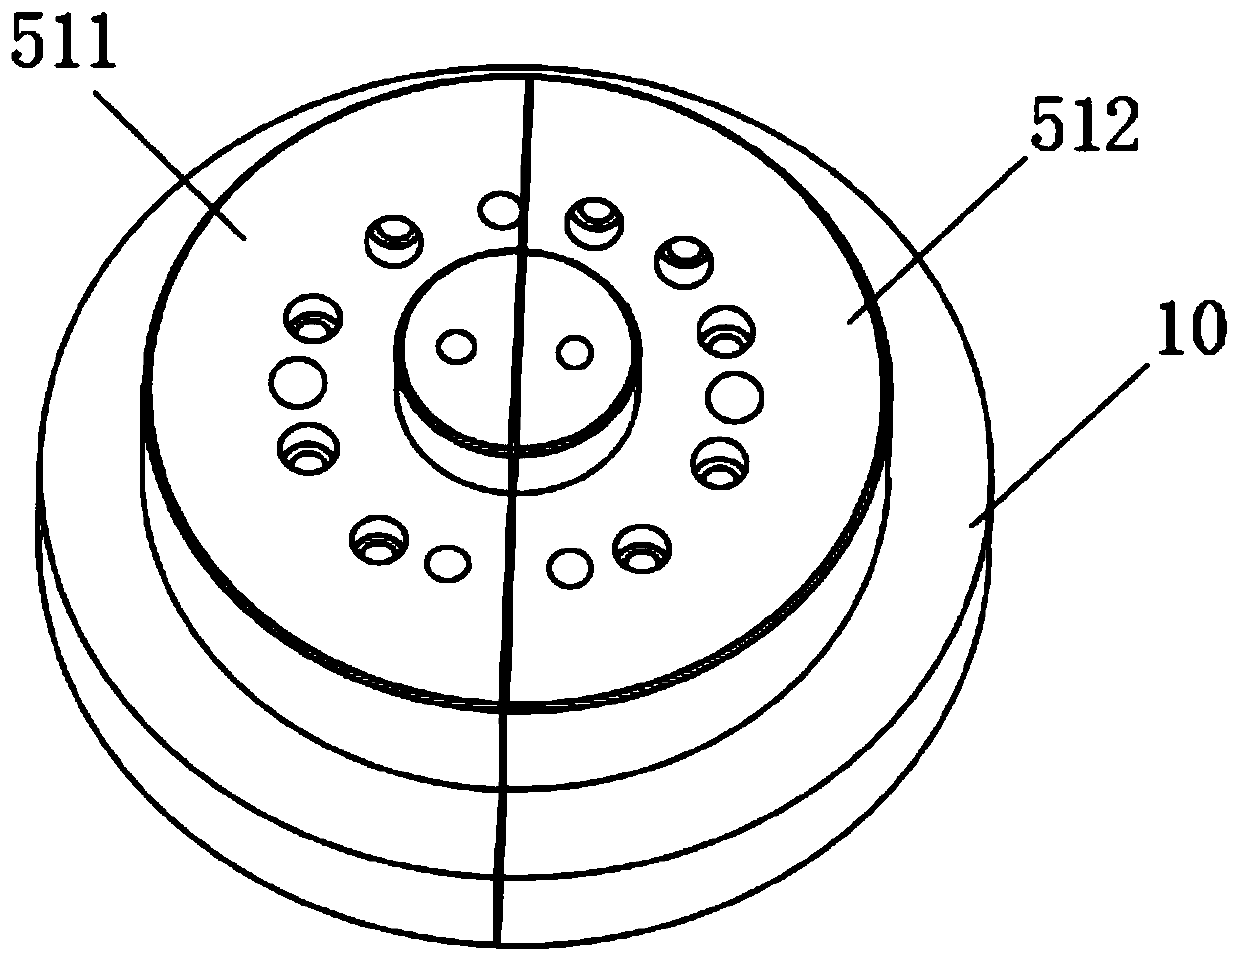 Oil seal radial force testing method